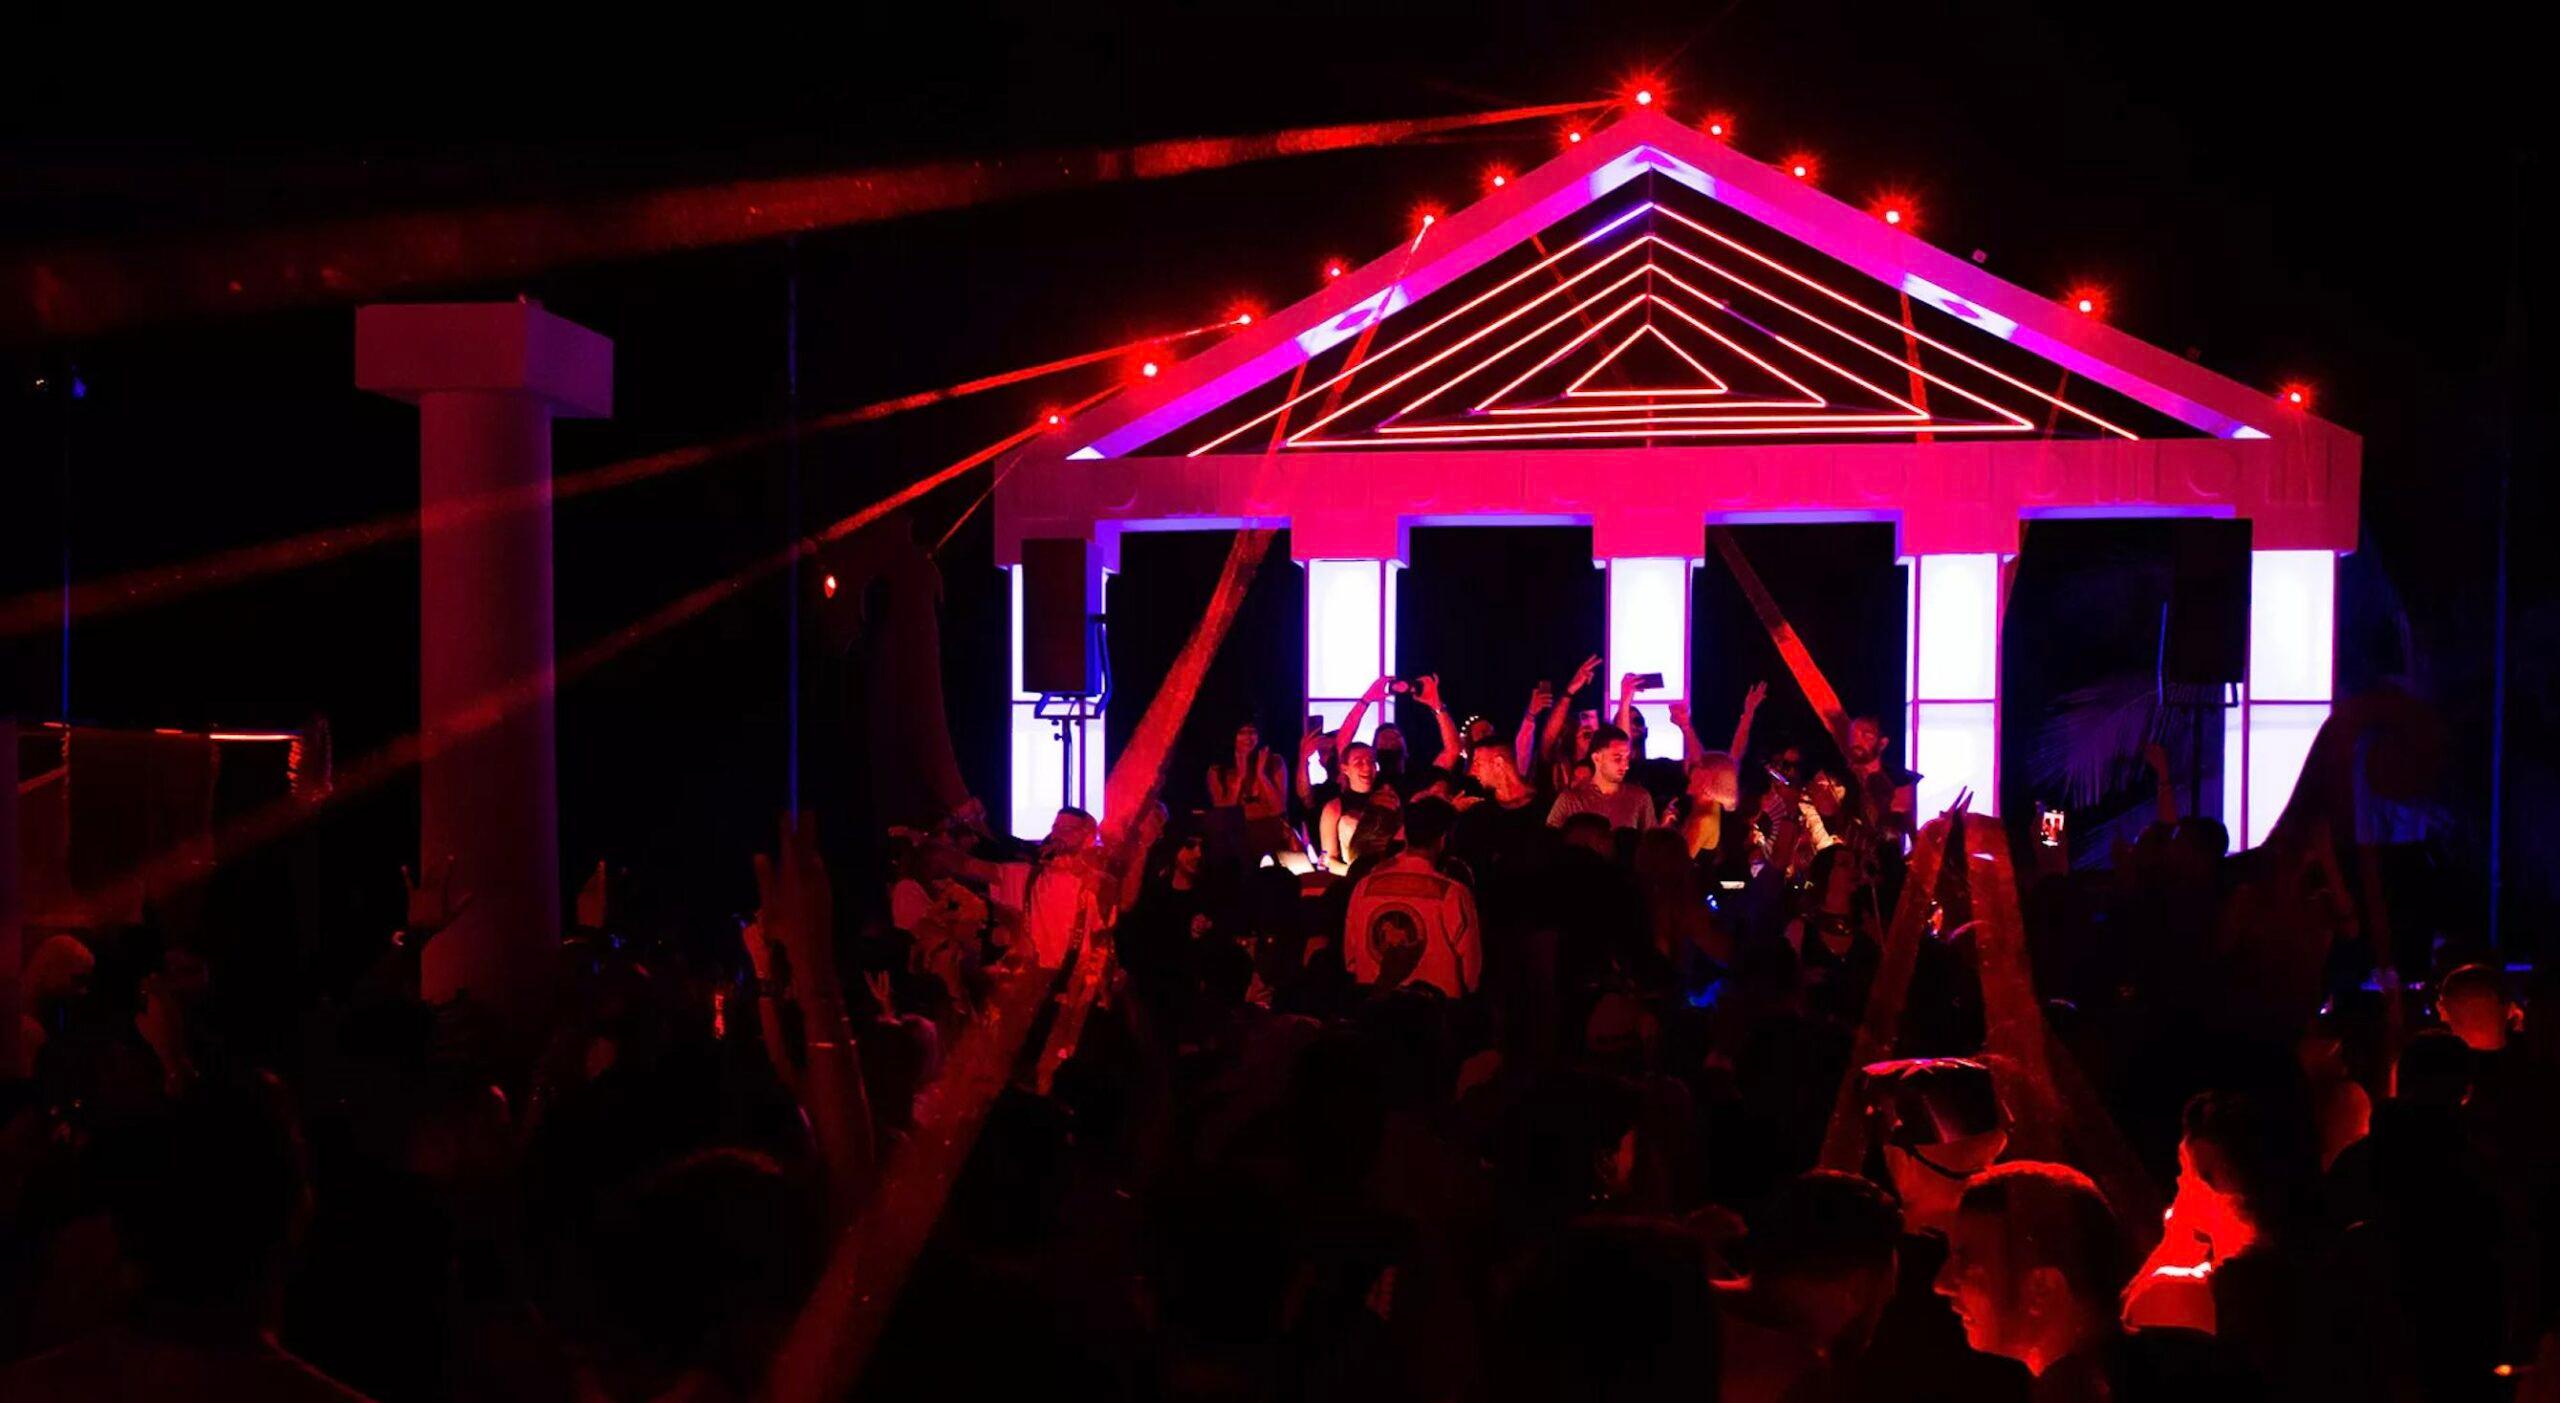 Snoopy Beats Festival brings DJs and dancing to Fujairah